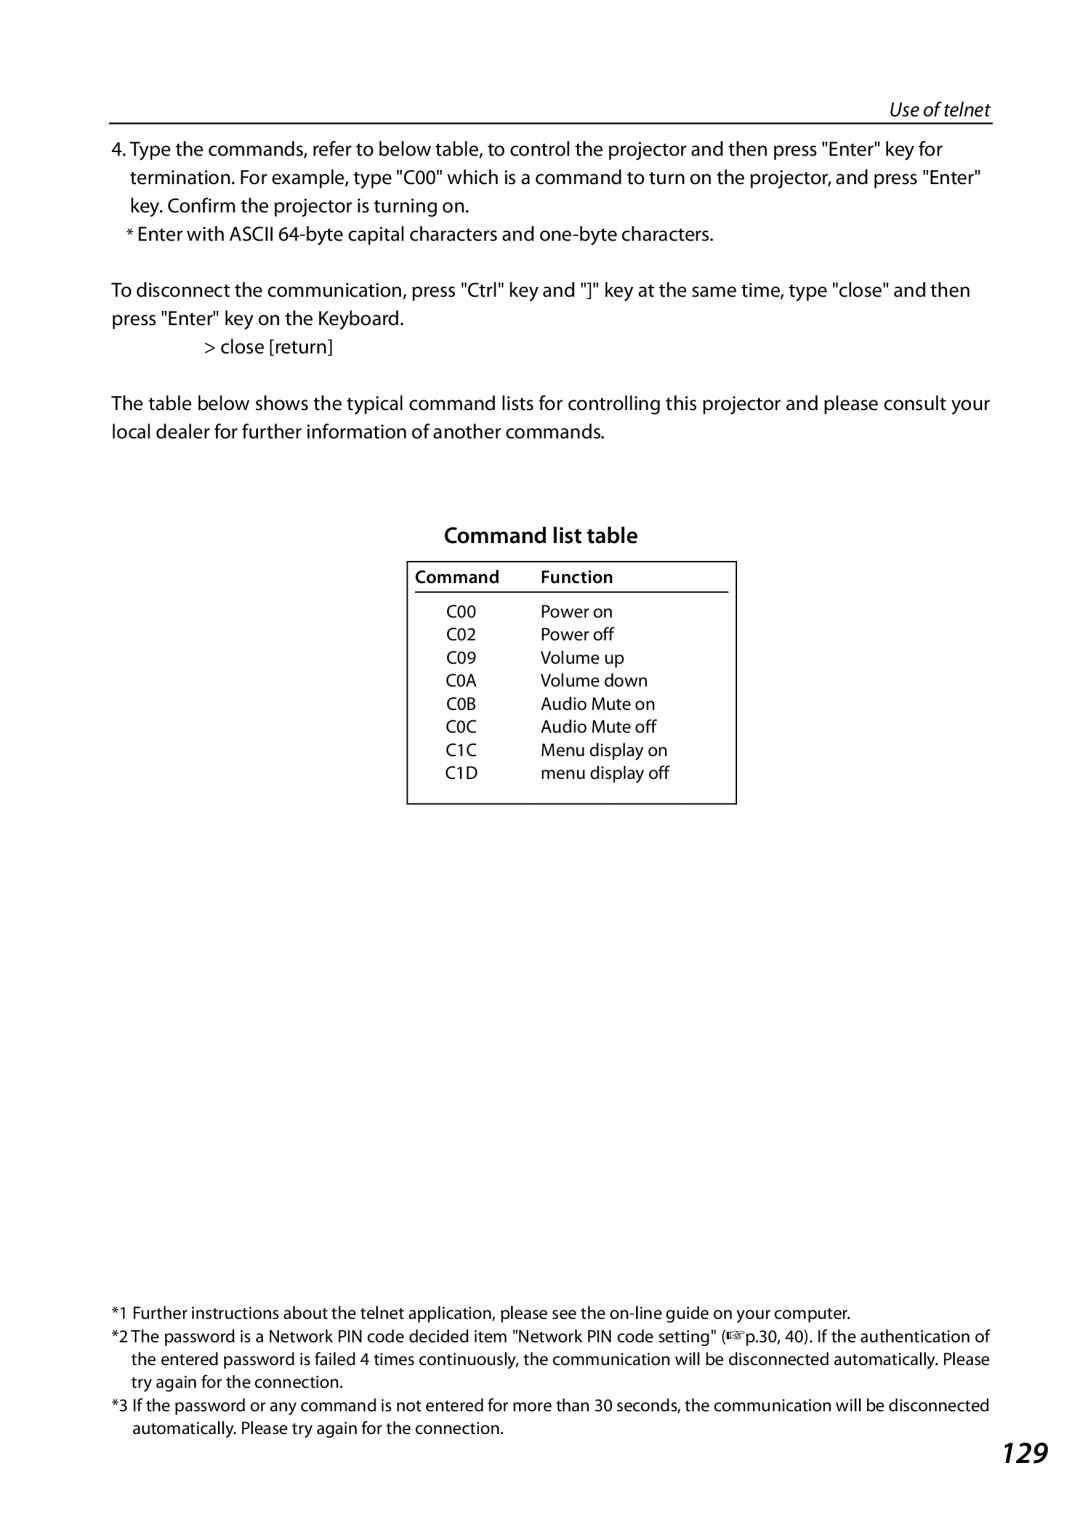 Sanyo PLCXL51 owner manual Command list table, Use of telnet 